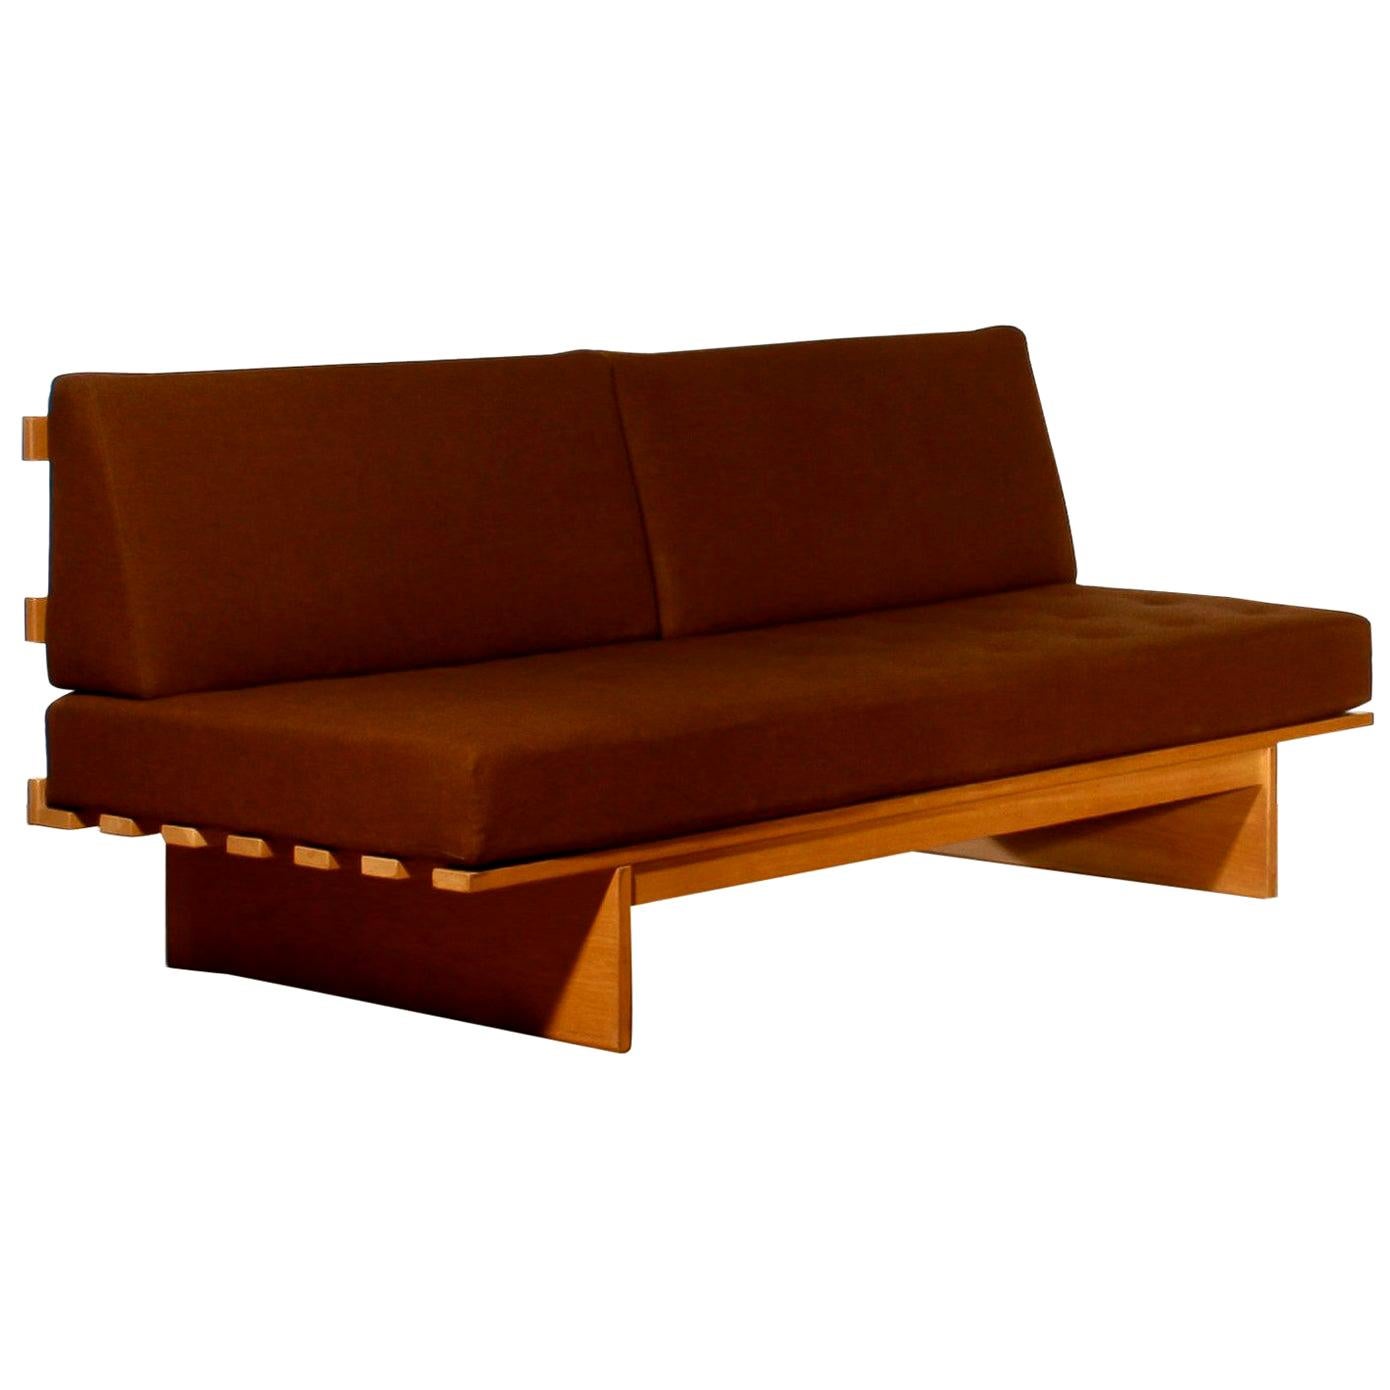 Scandinavian Modern 1970s Oak and Wool Sofa / Sleeper by Bra Bohag for DUX